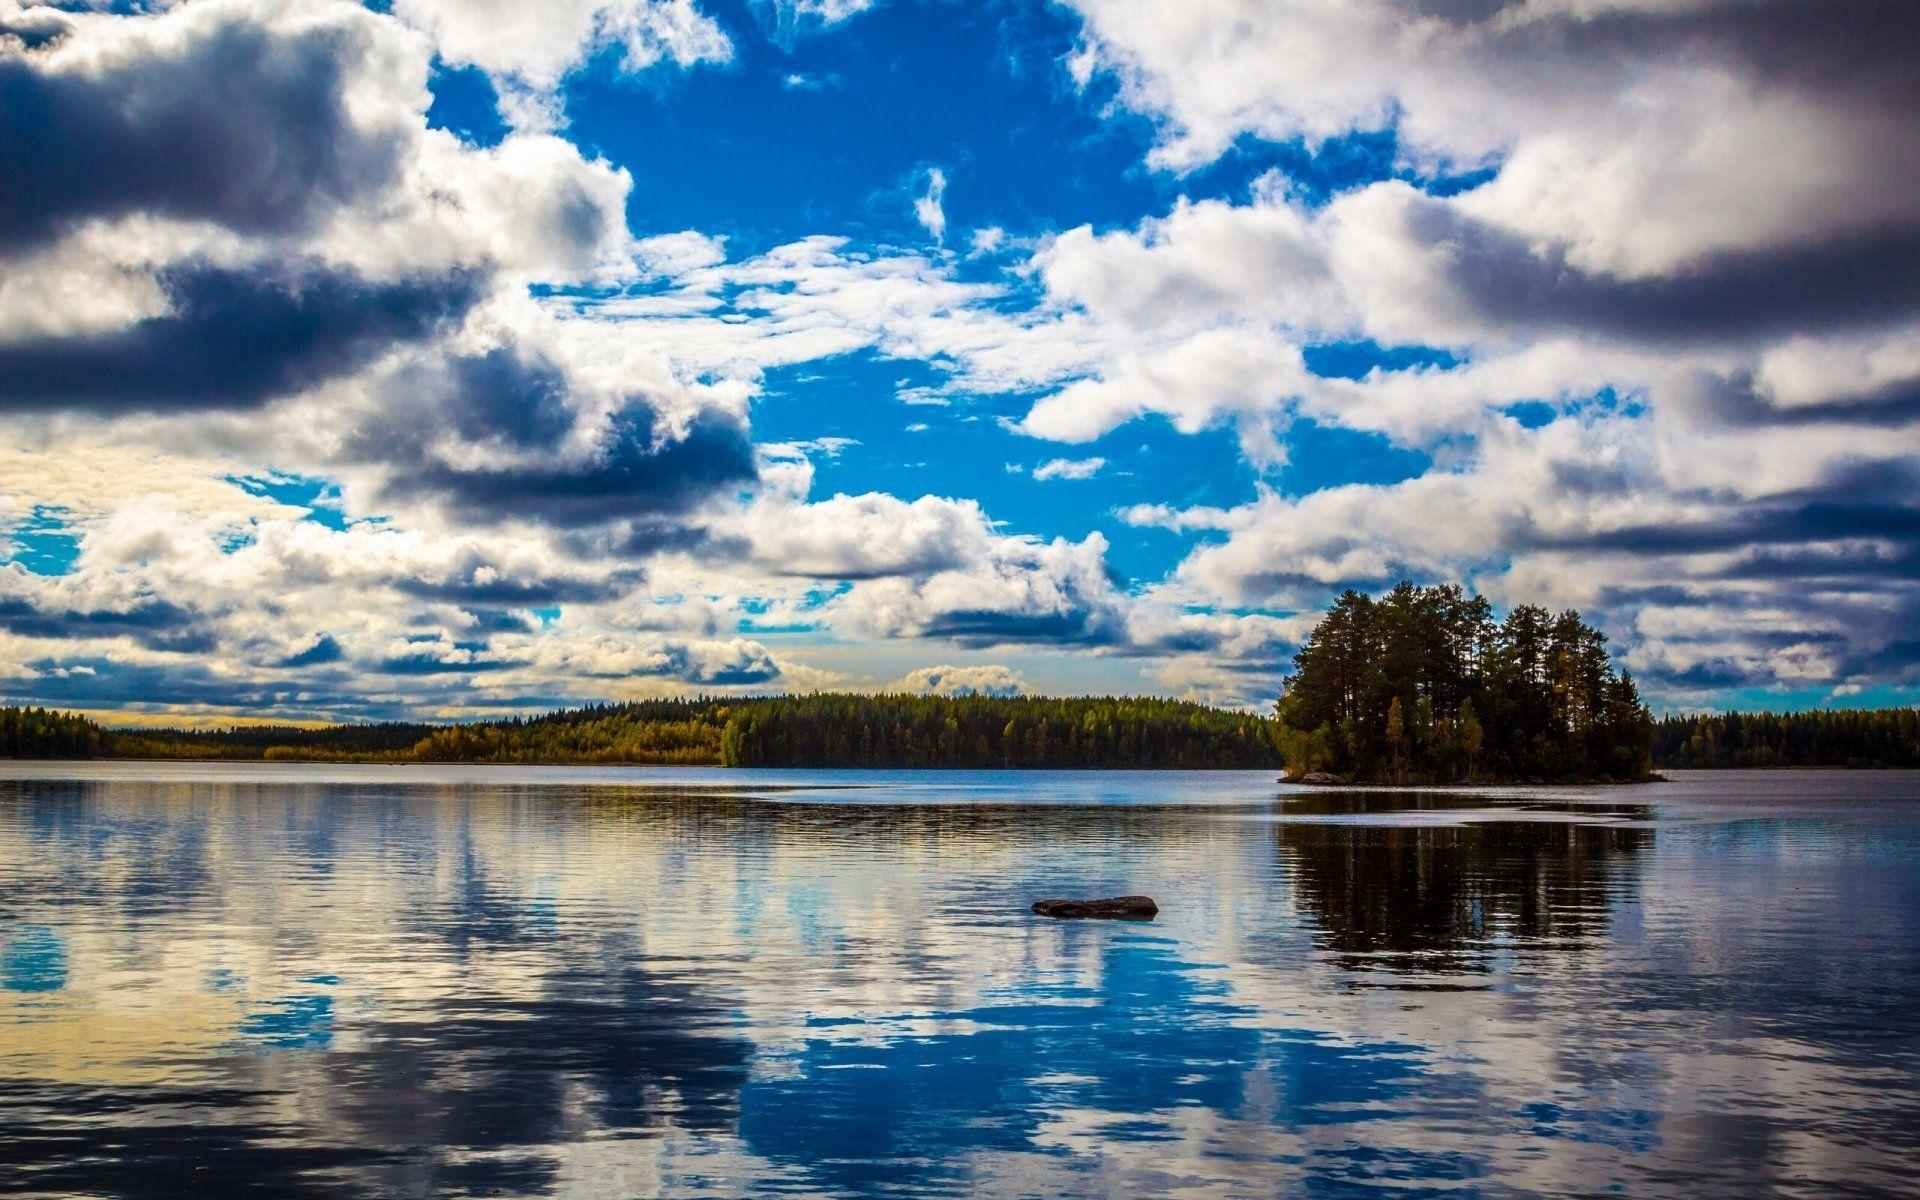 kullaa finland finland lake island clouds HD wallpaper